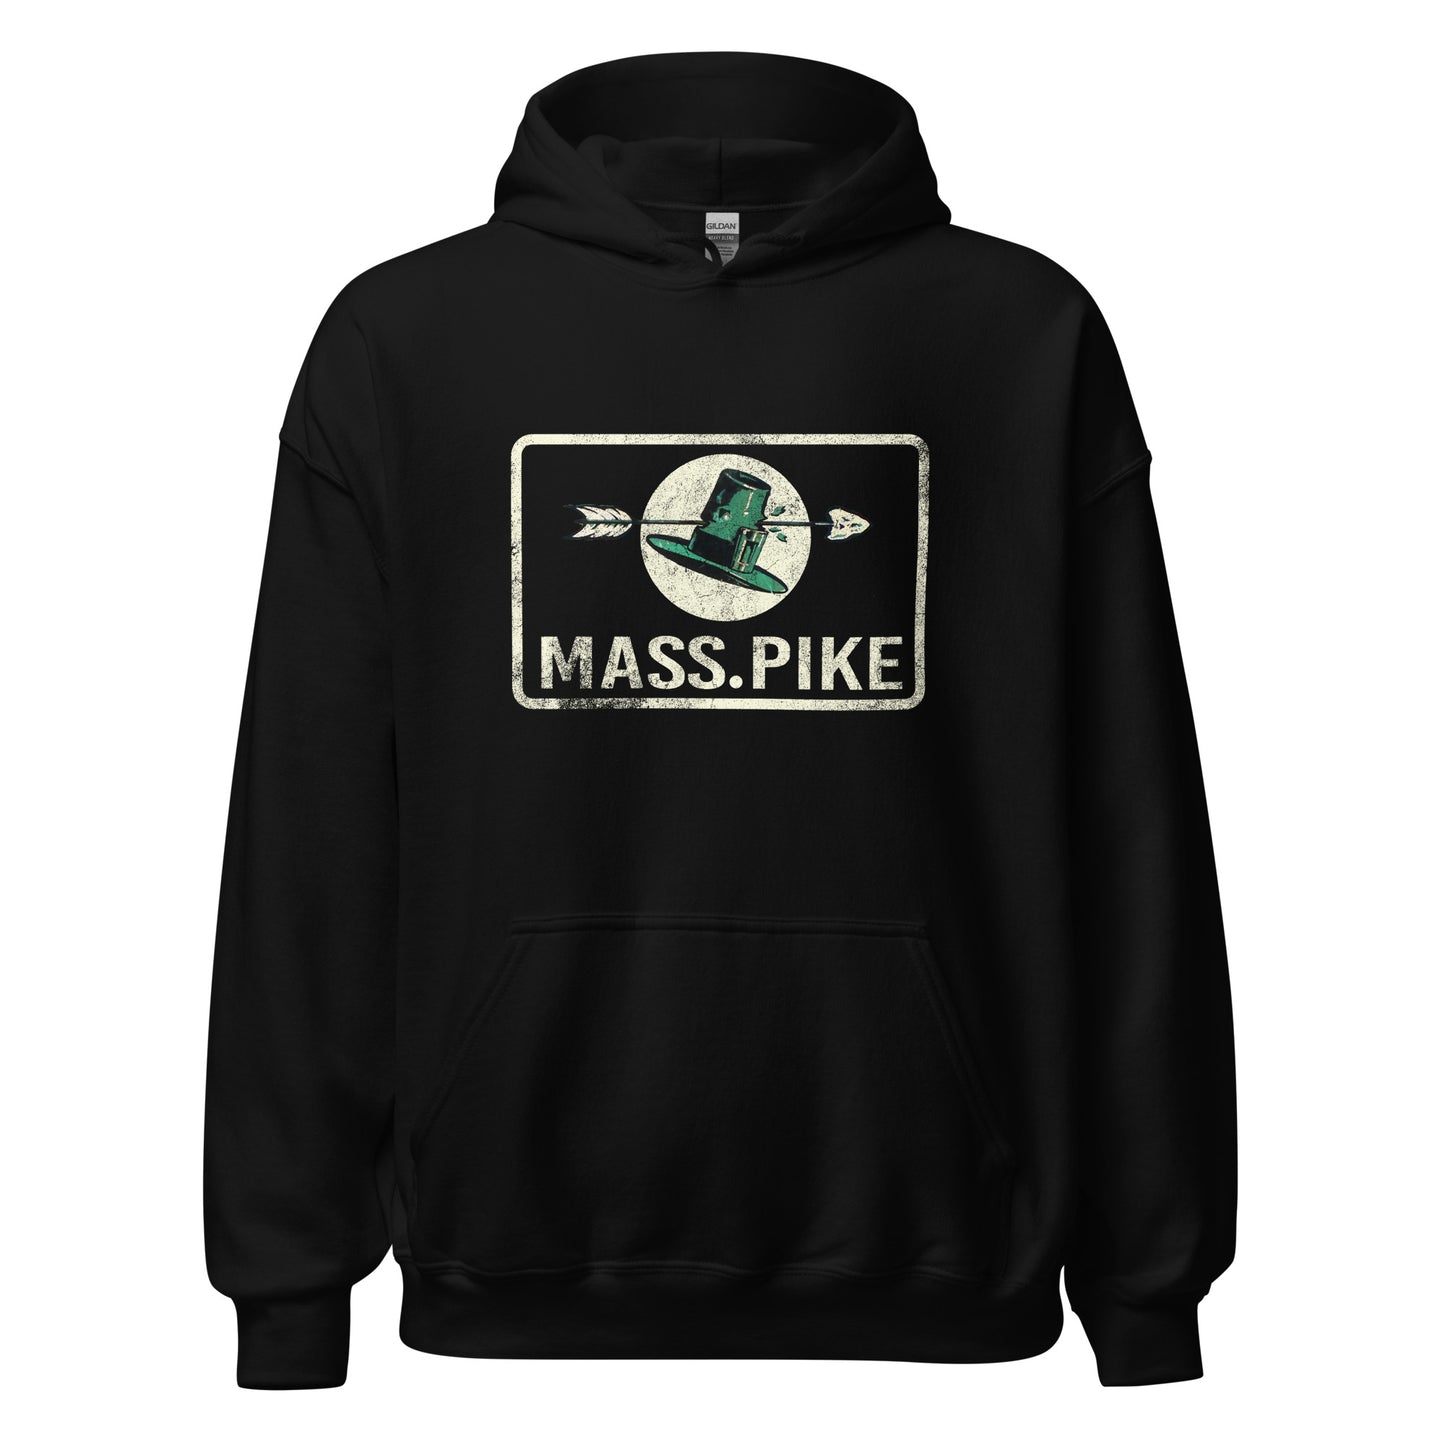 Mass Pike Vintage Hoodie - Retro 1960s Massachusetts Turnpike Sweatshirt